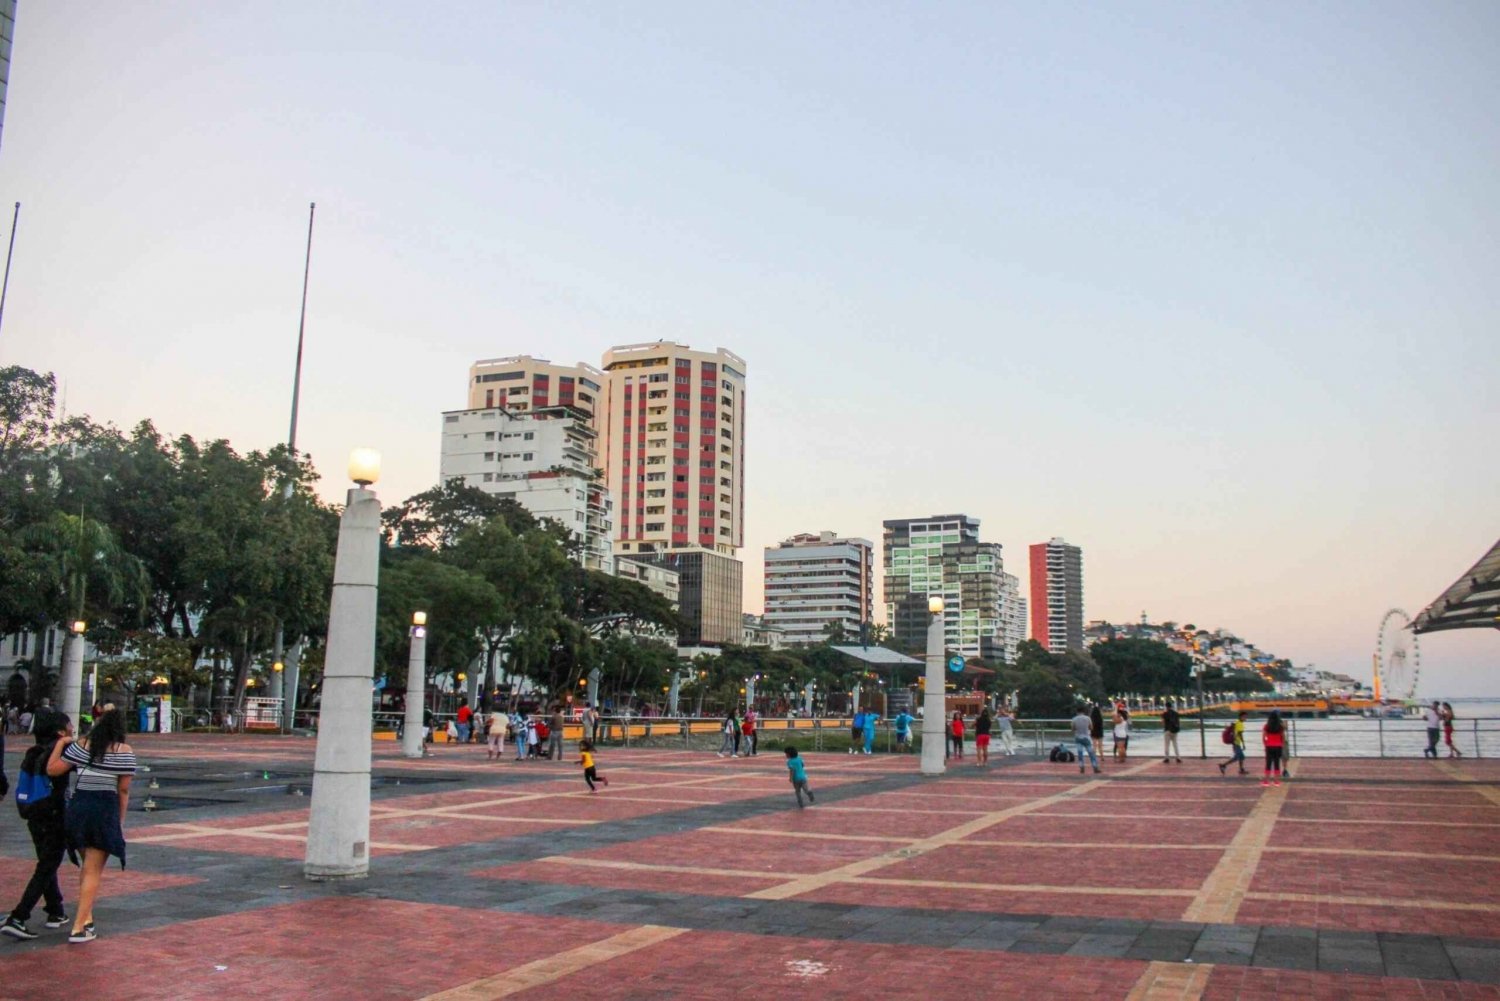 Selvguidet spasertur til Guayaquils landemerker.